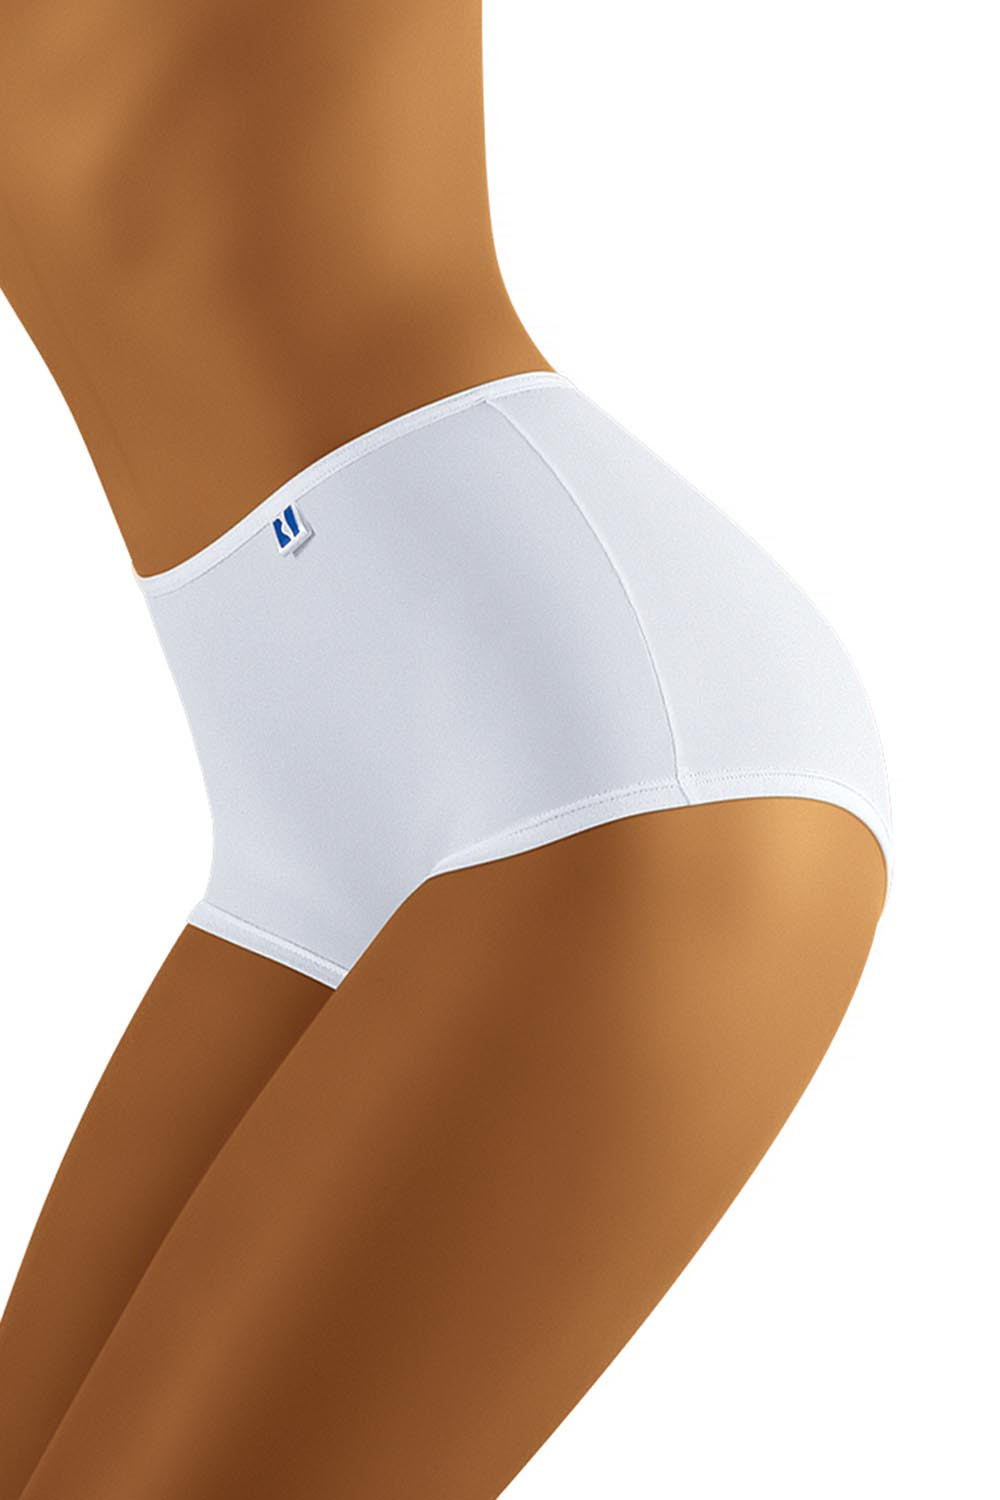 Wol-Bar Tahoo Shorts kolor:biały M